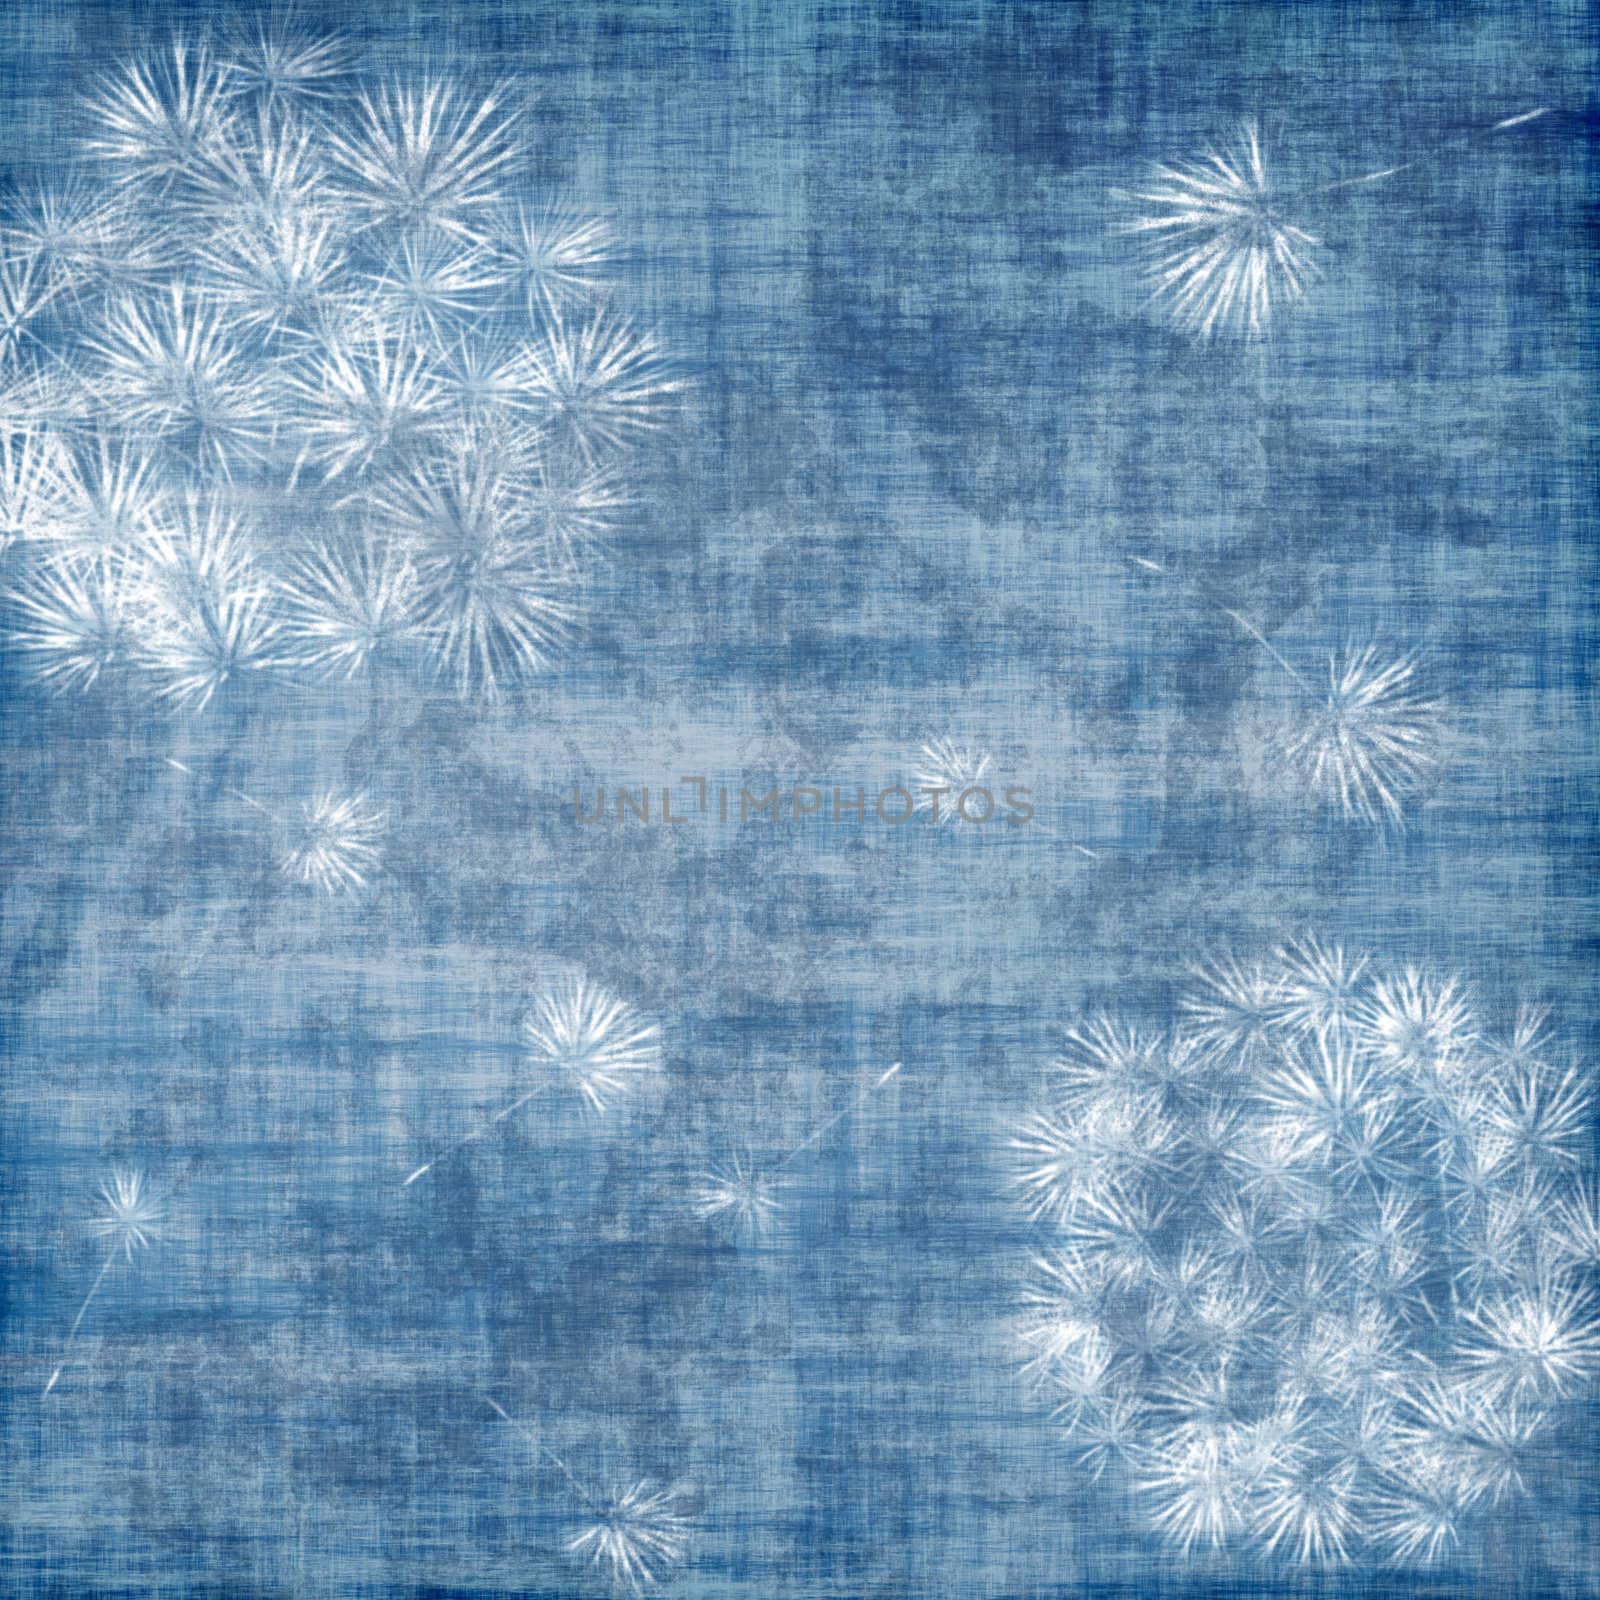 Dandelions over blue by Lirch